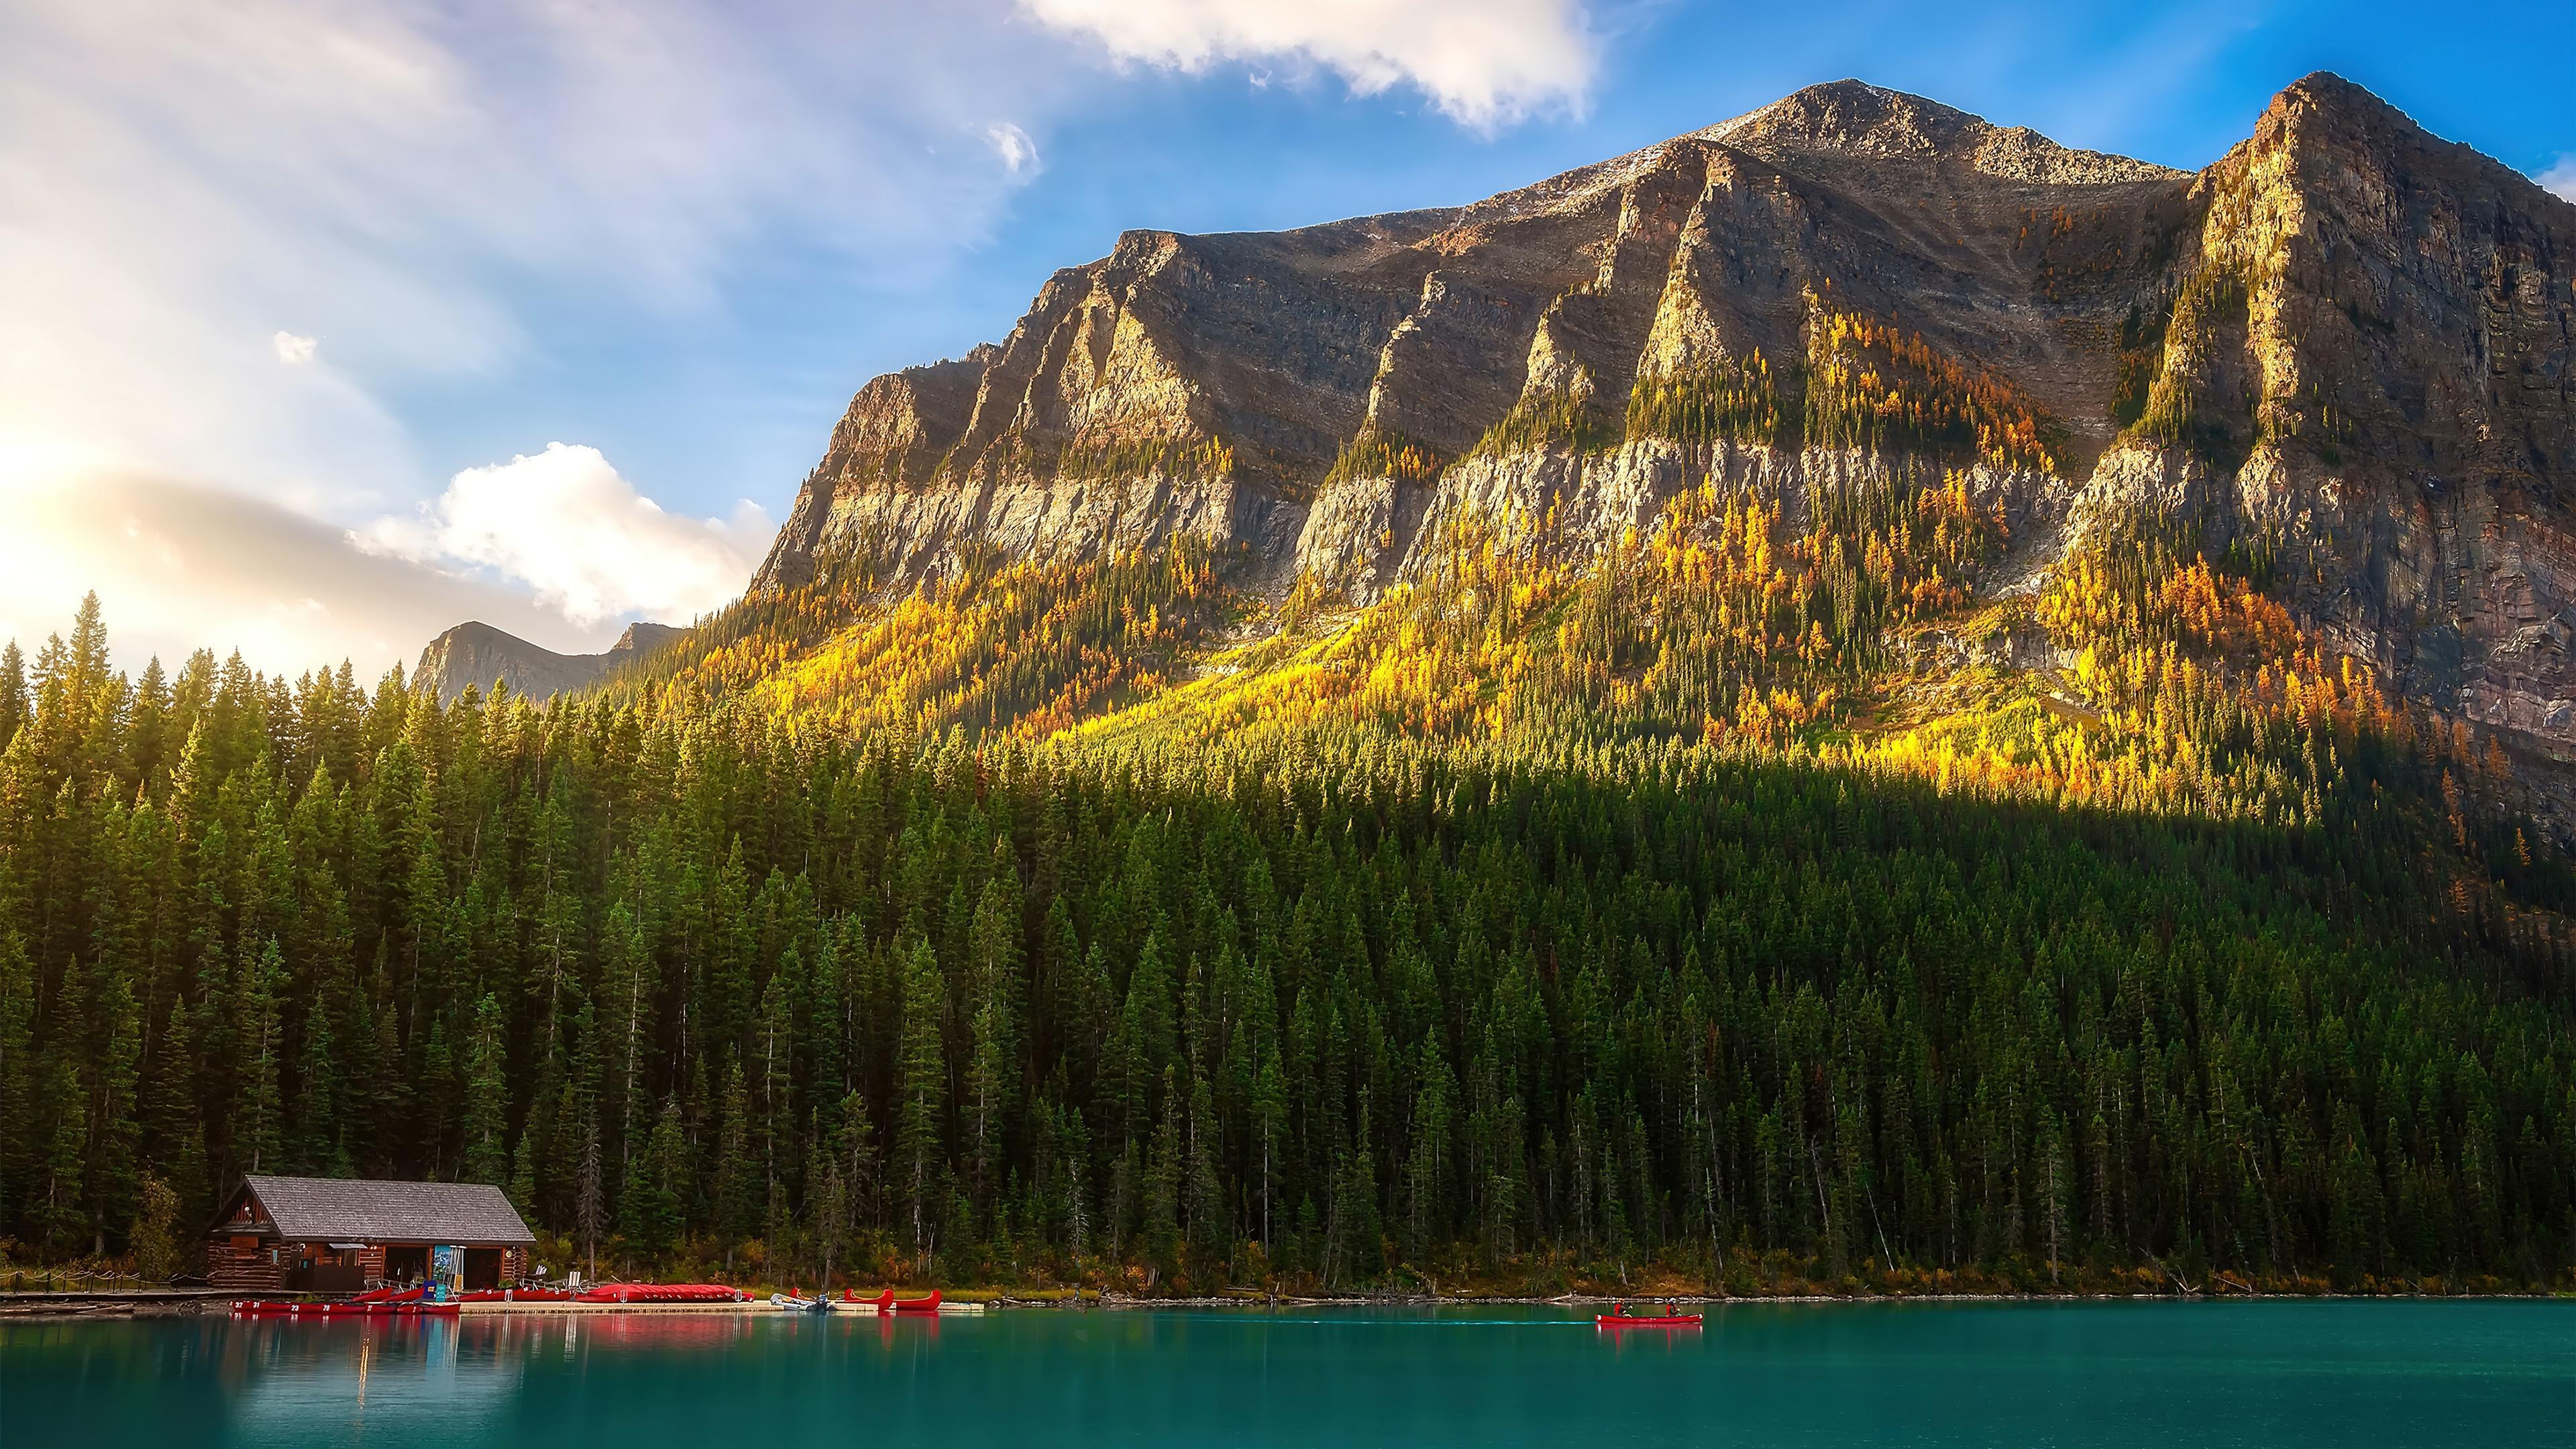 HD wallpaper, Mountain, Lake, Cabin, 4K, Forest, Scenery, Nature